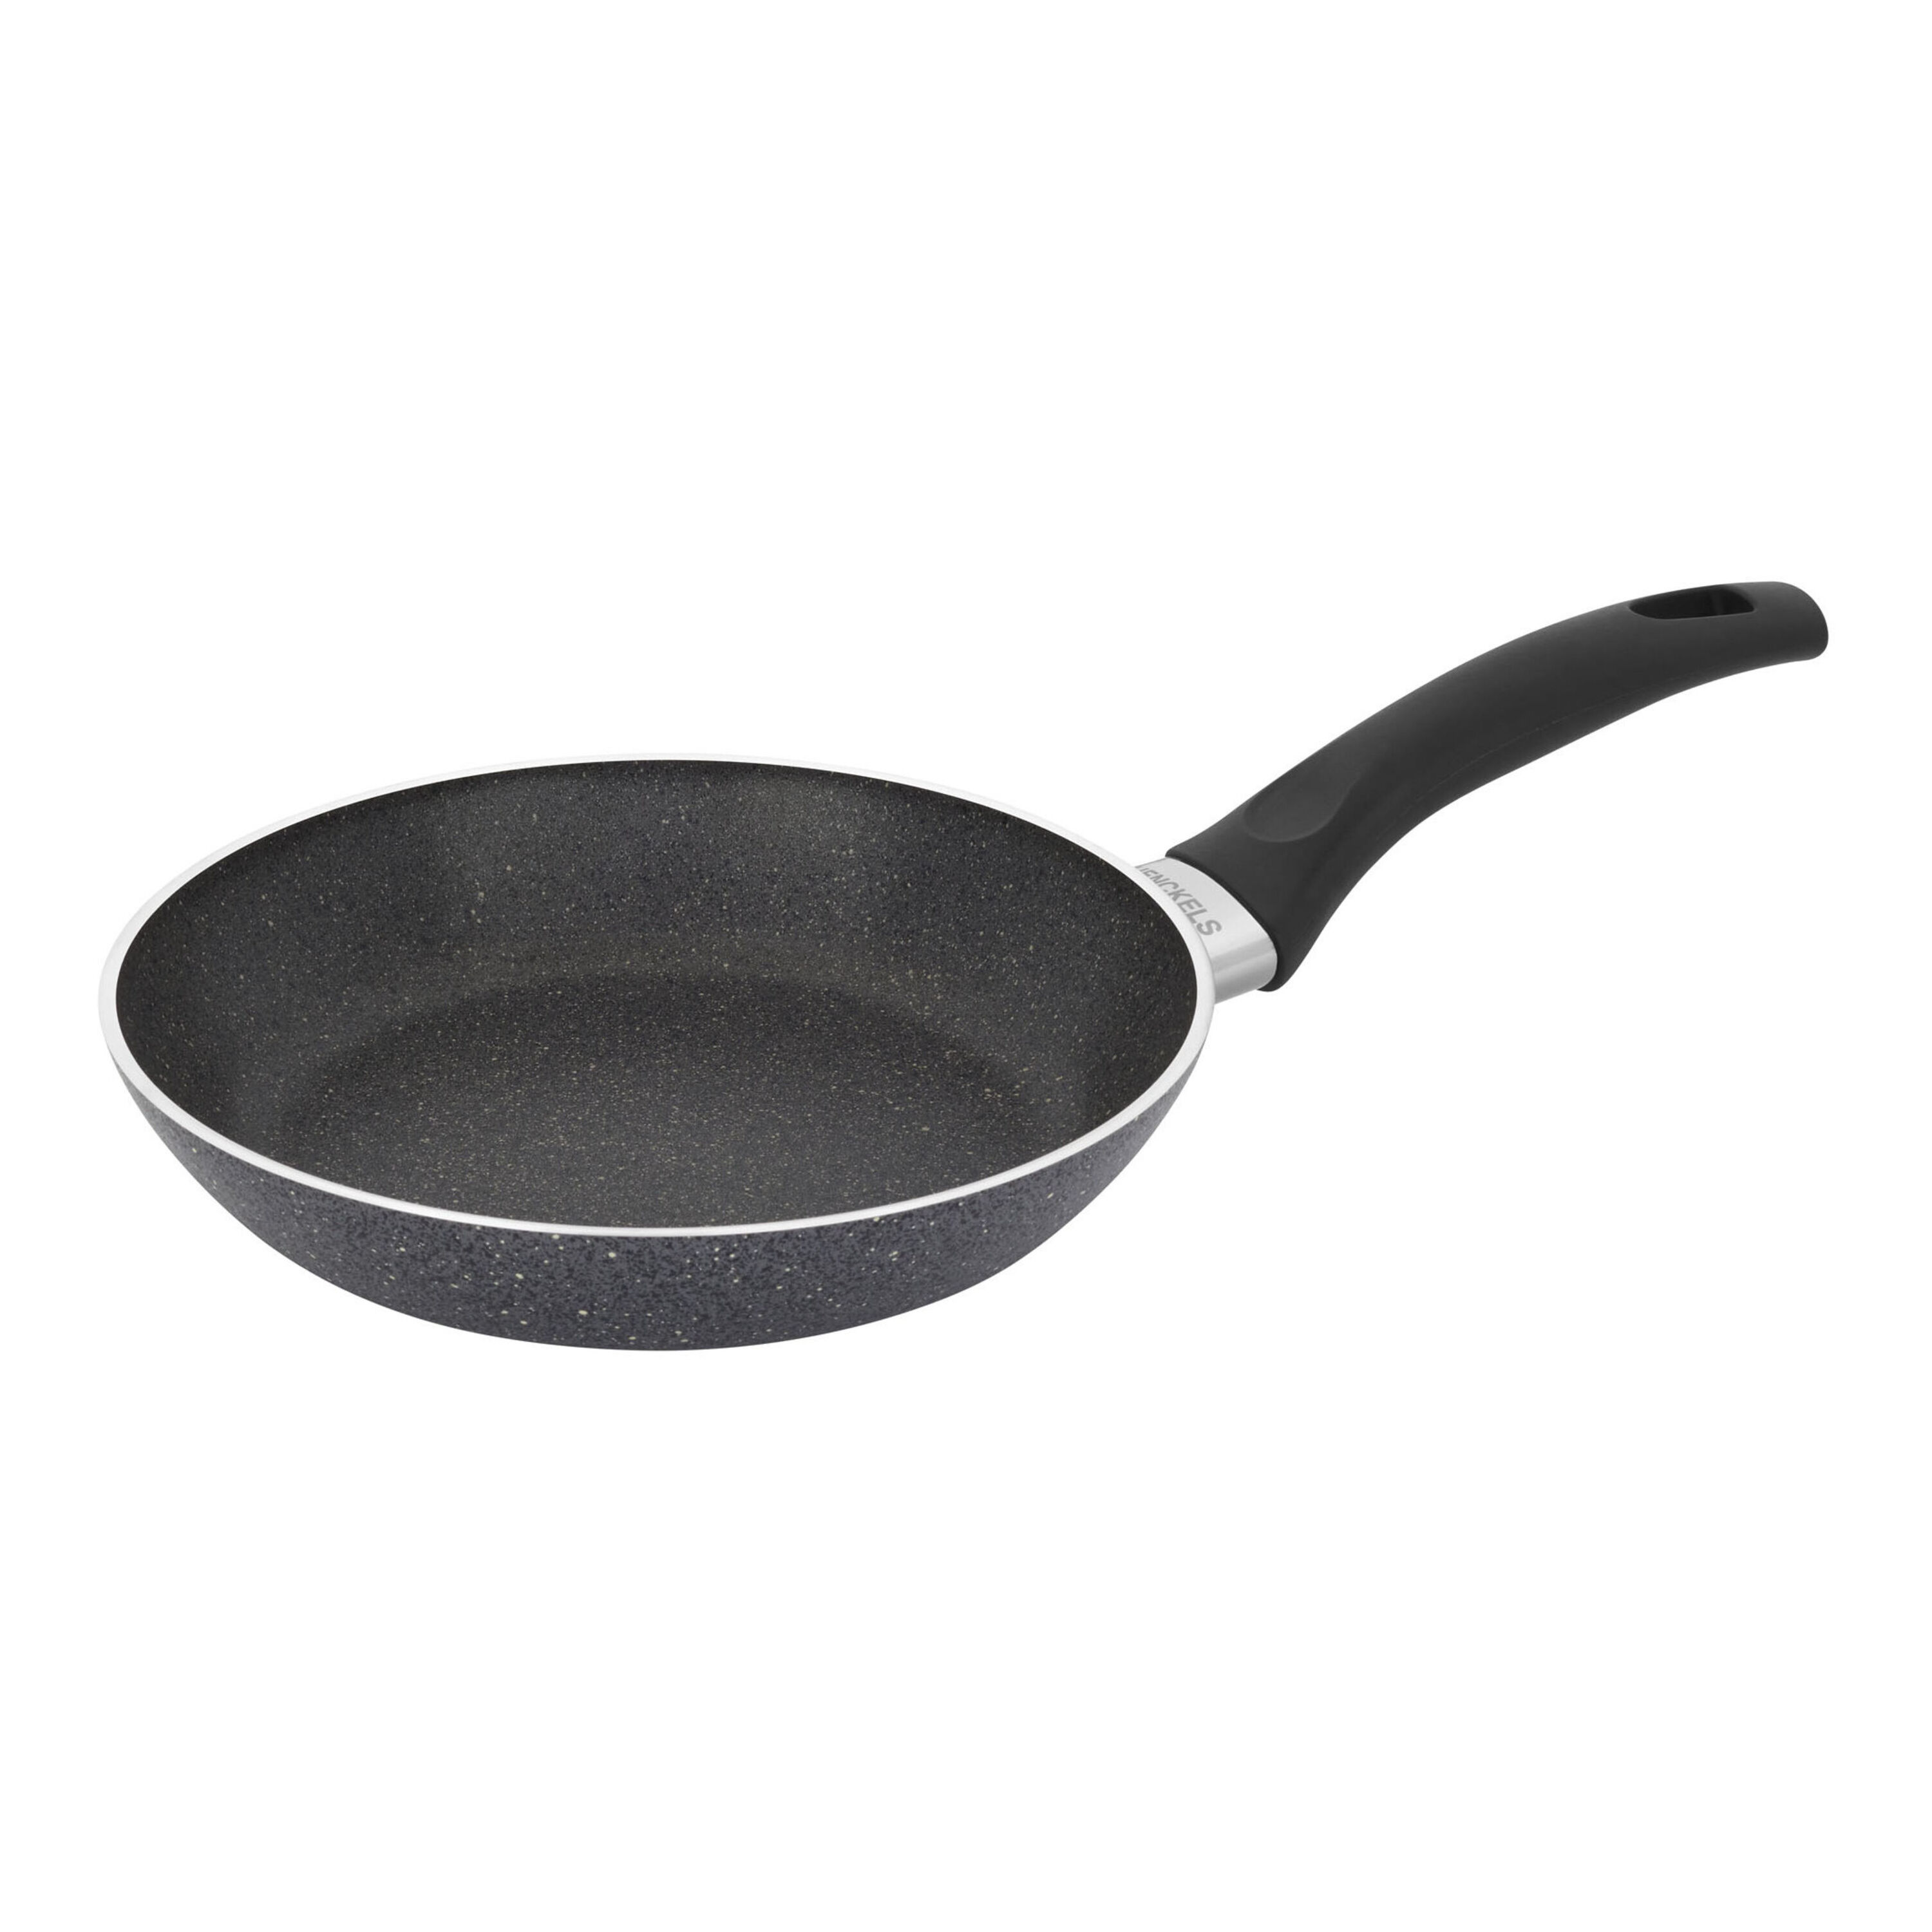 Henckels Clad H3 8-inch Stainless Steel Fry Pan, 8-inch - Ralphs